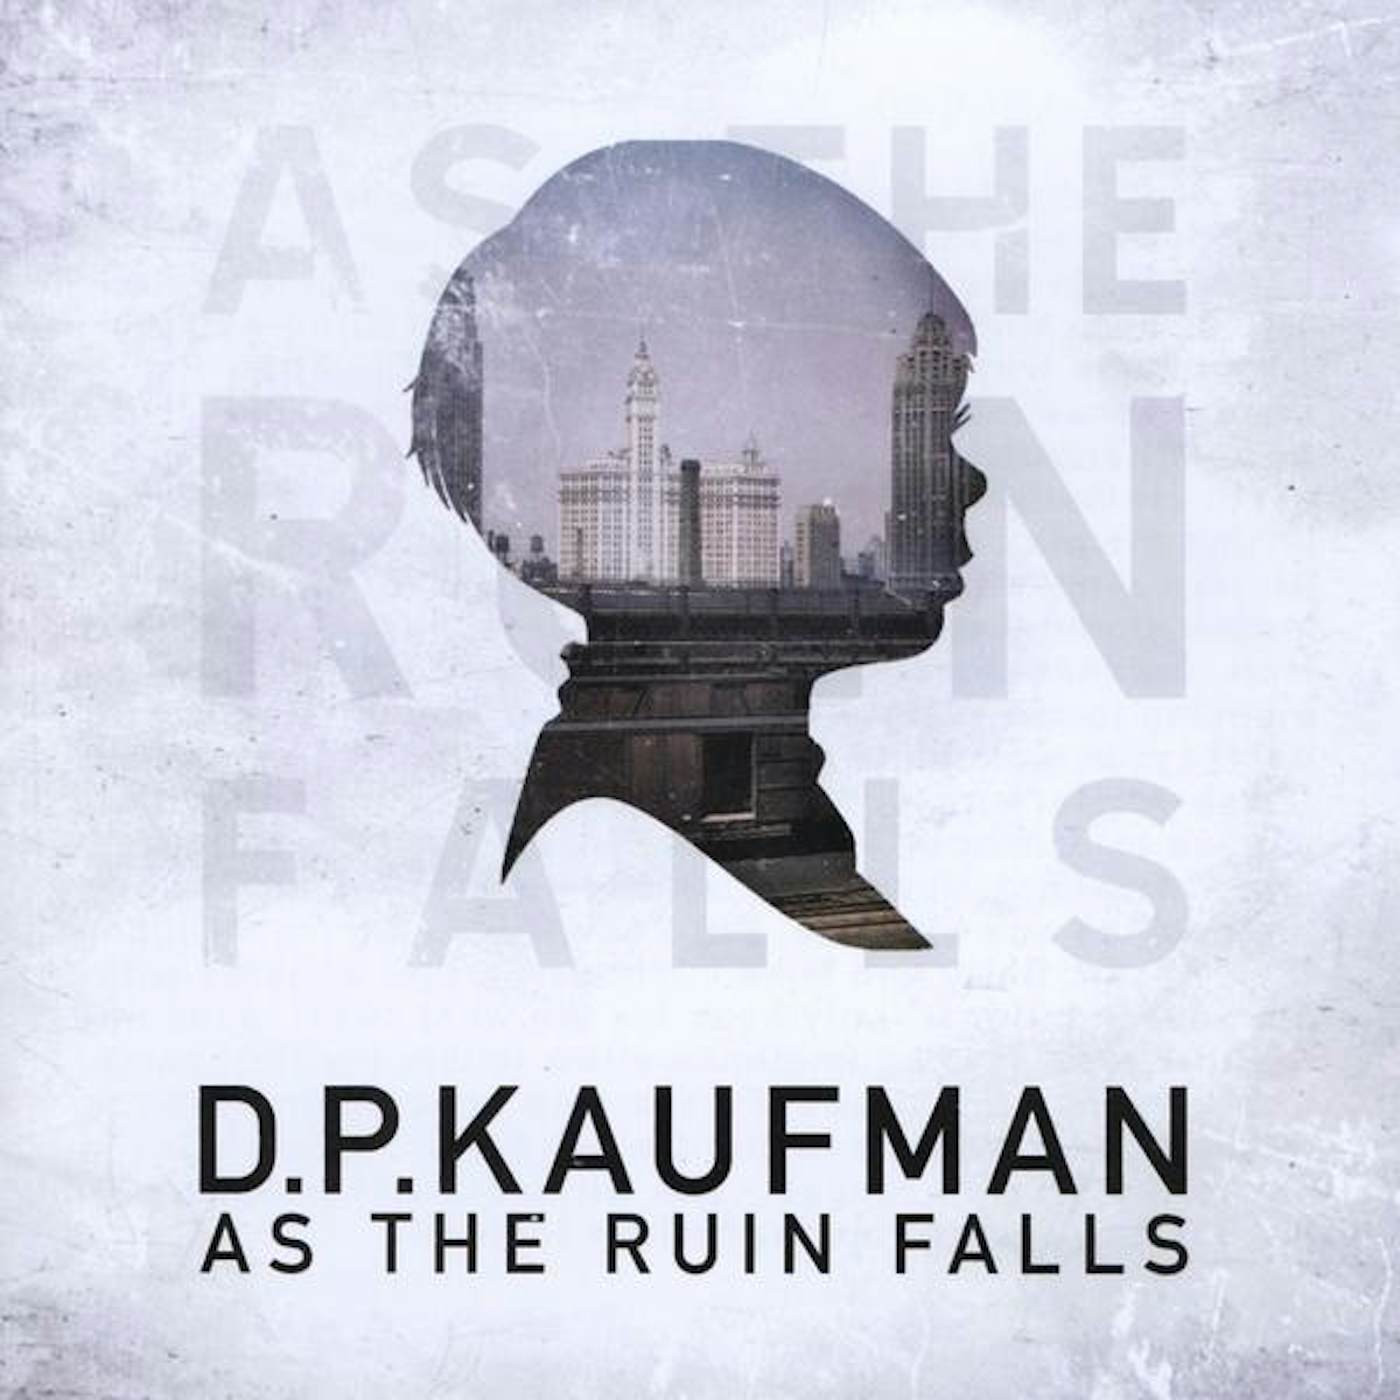 D.P.Kaufman AS THE RUIN FALLS CD